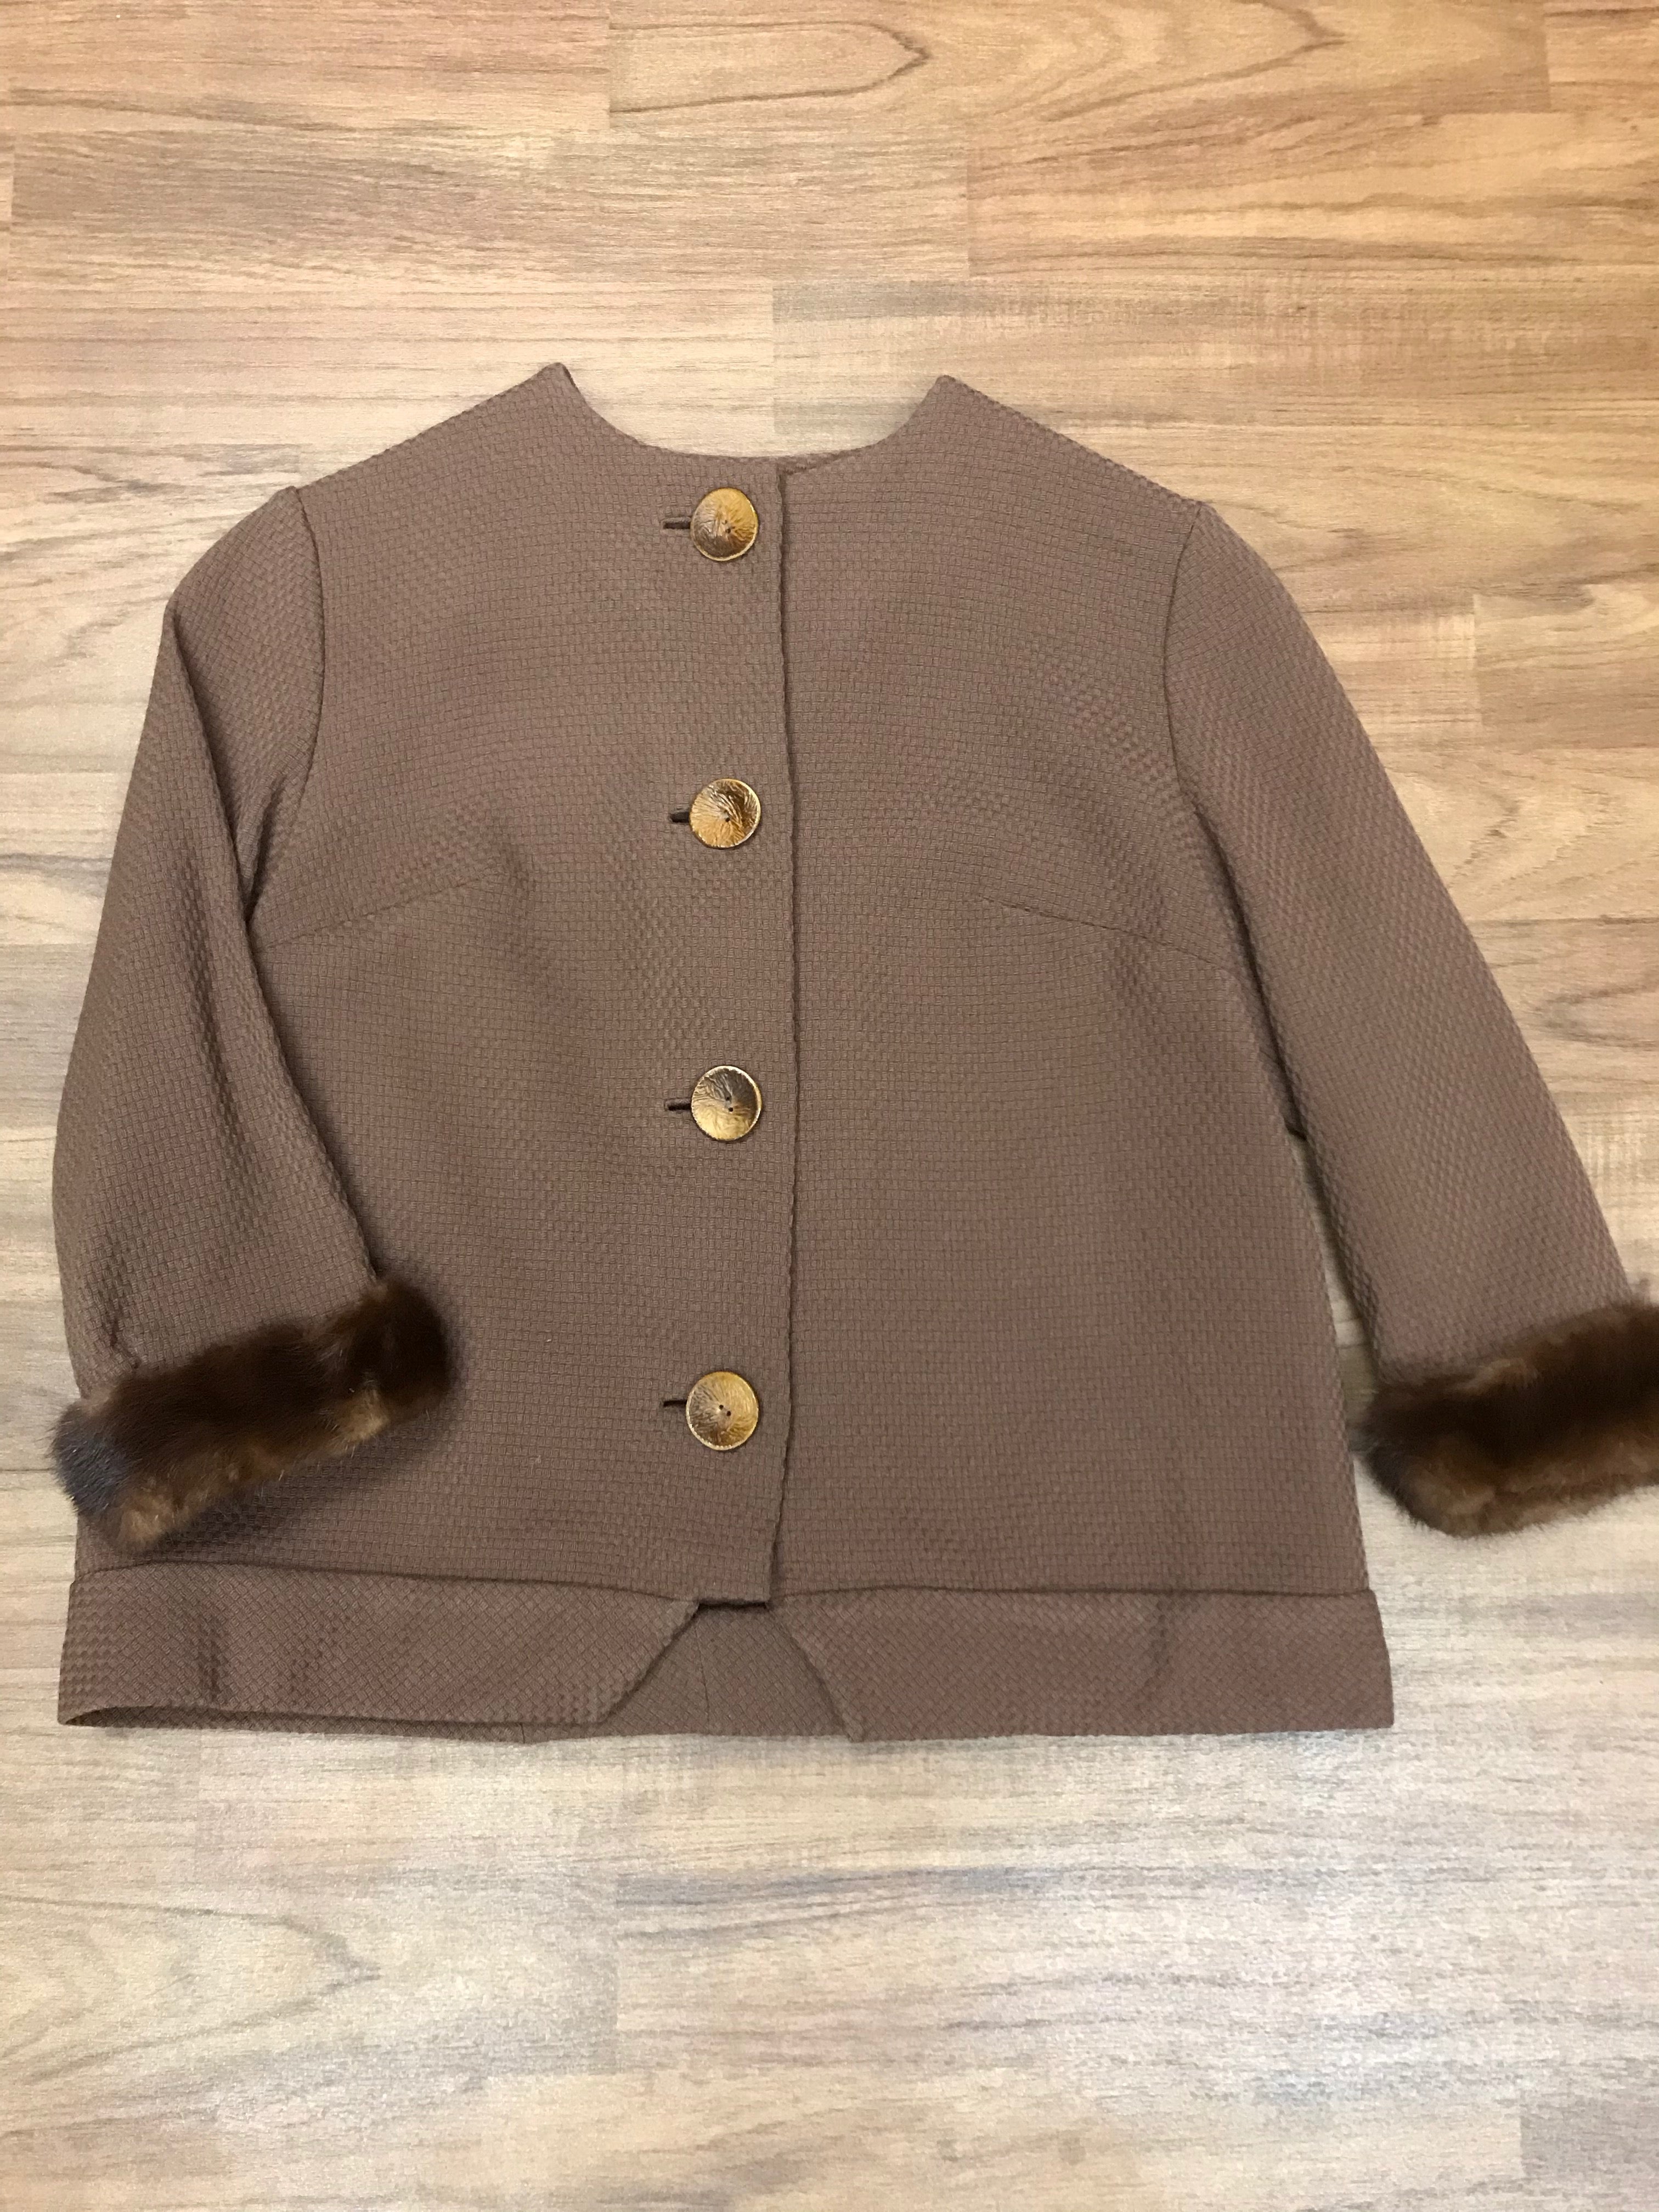 Vintage Jacke in braun Gr.38